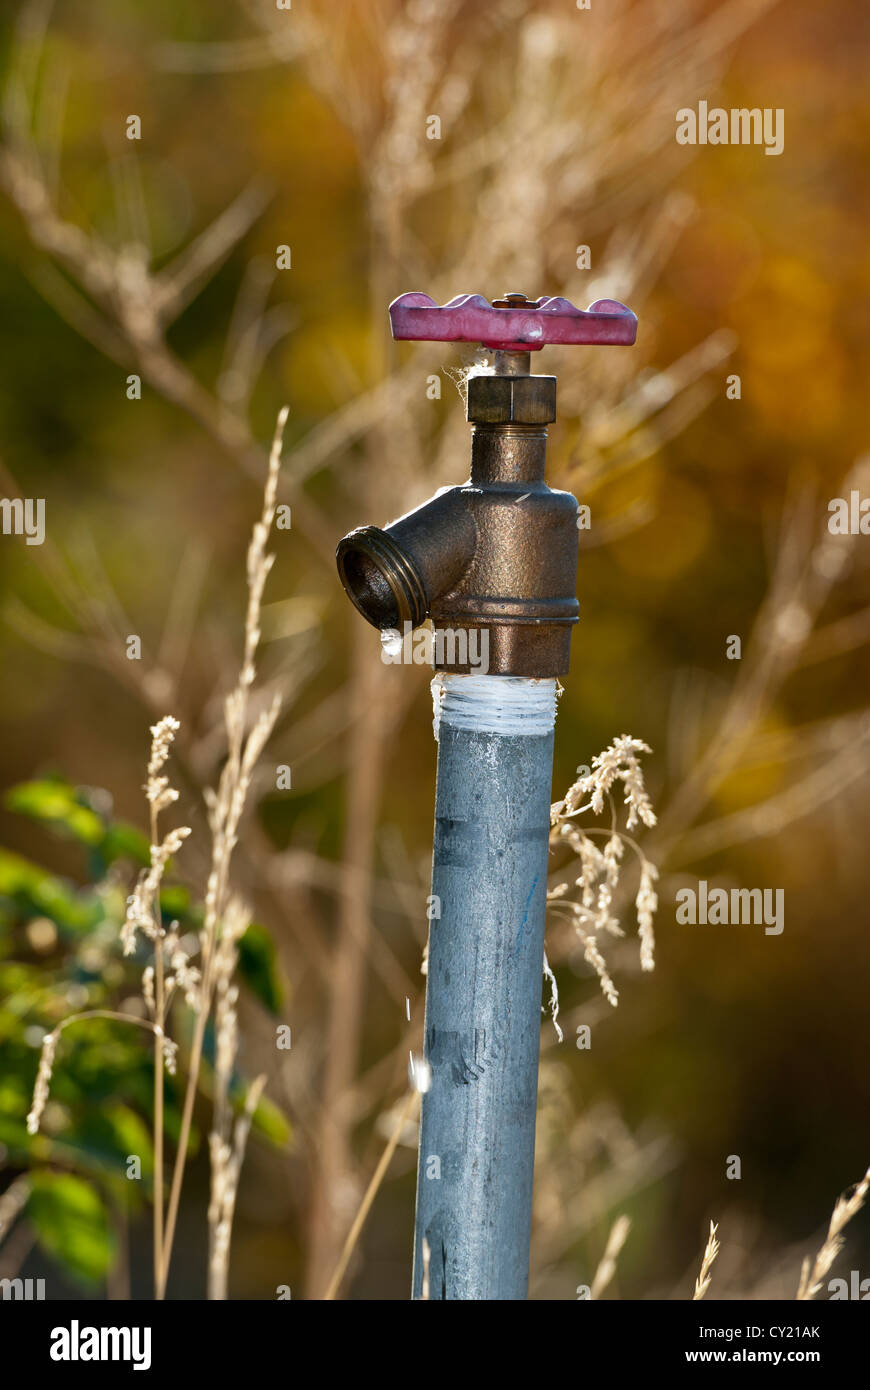 Spigot with water drop Stock Photo